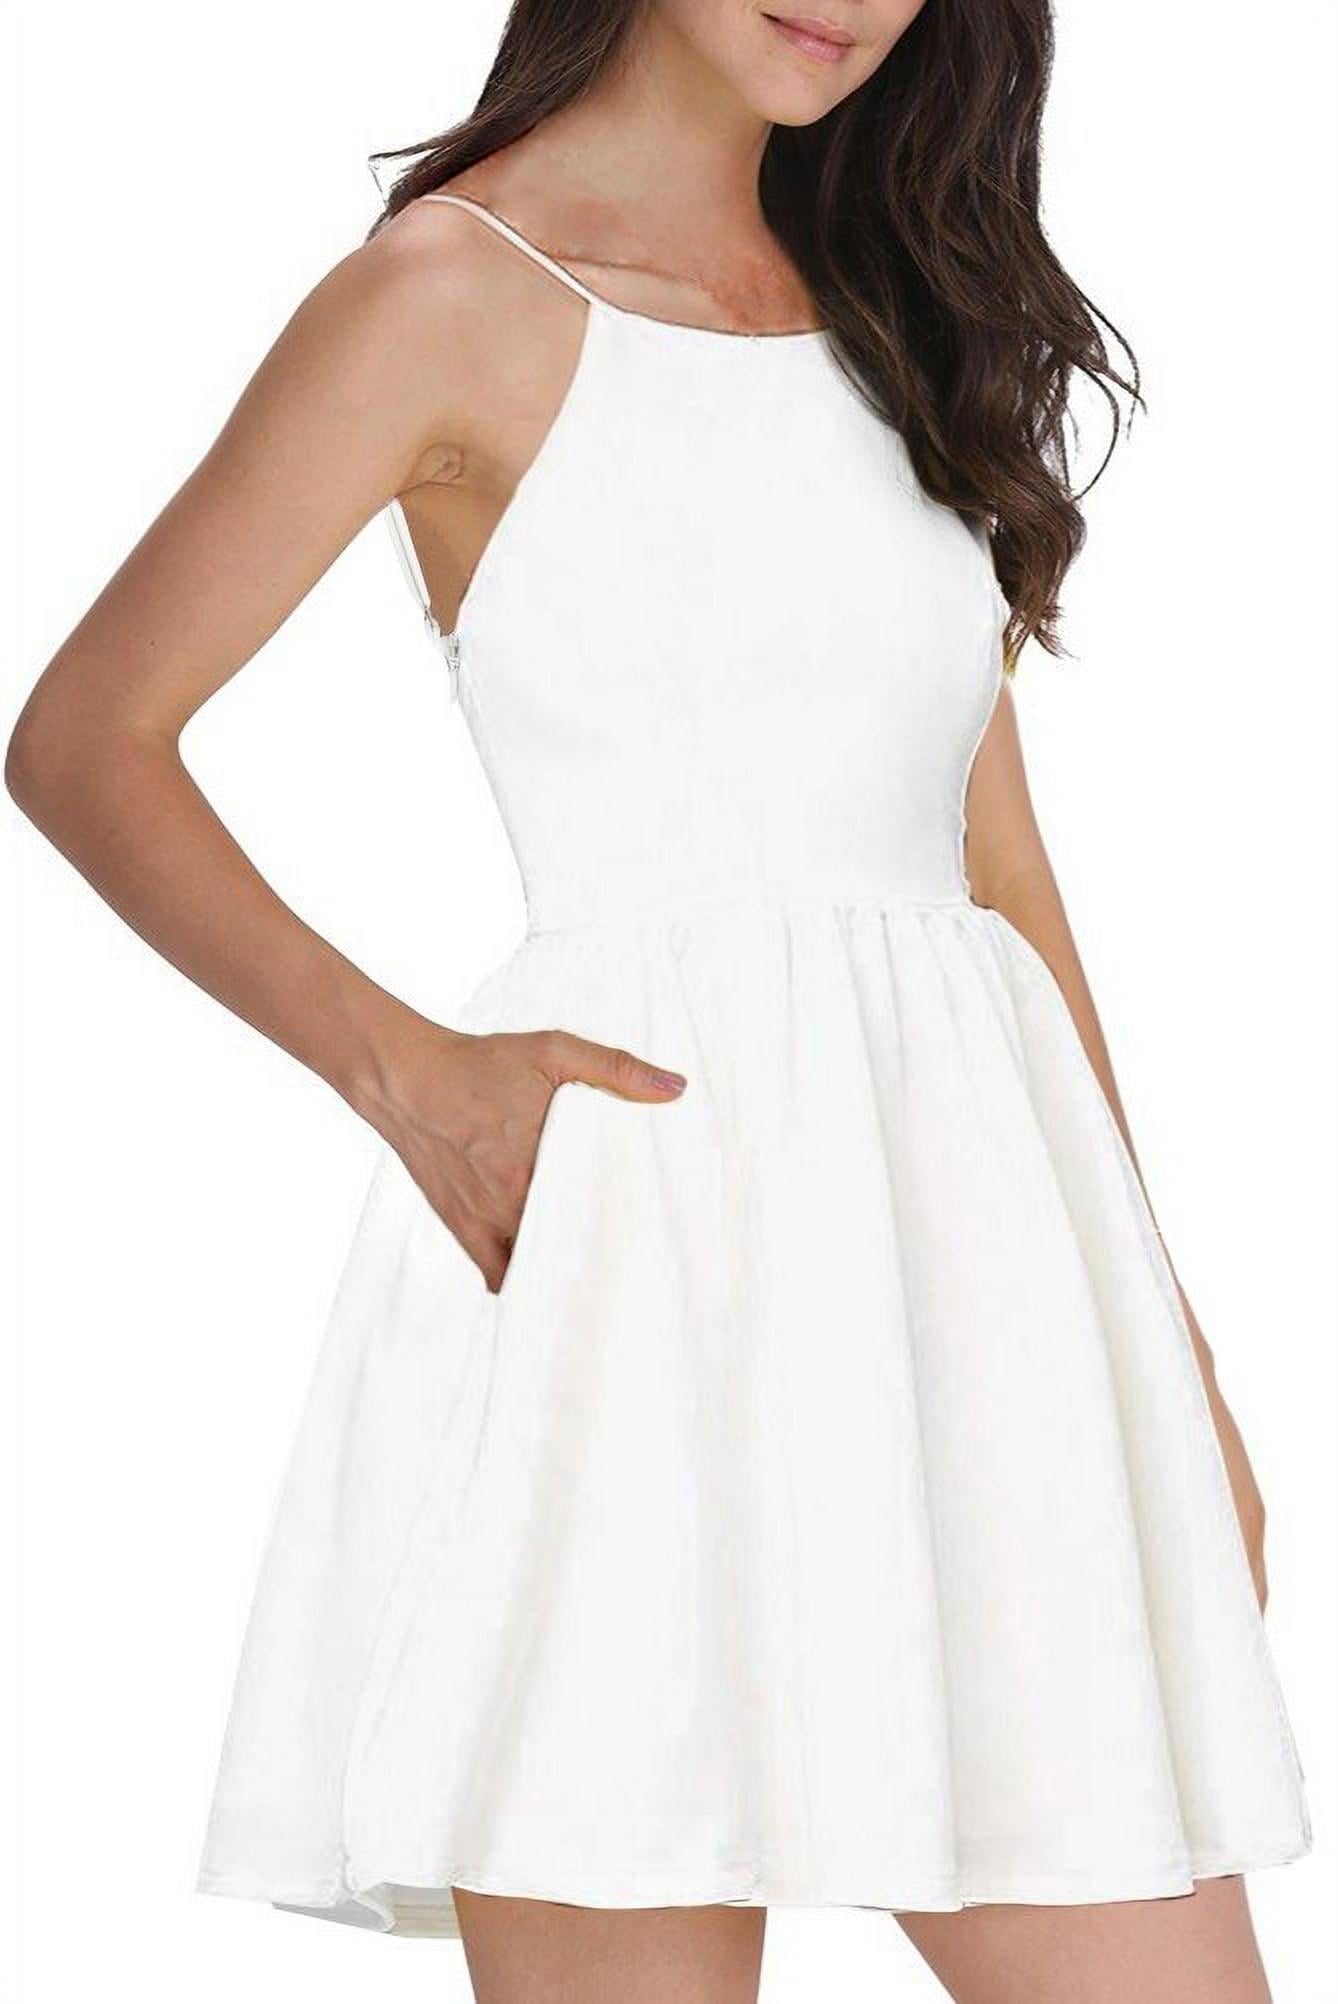 Women's White Short Dress Spaghetti Strap Backless Mini Skater Juniors Dresses White M - Walmart.com